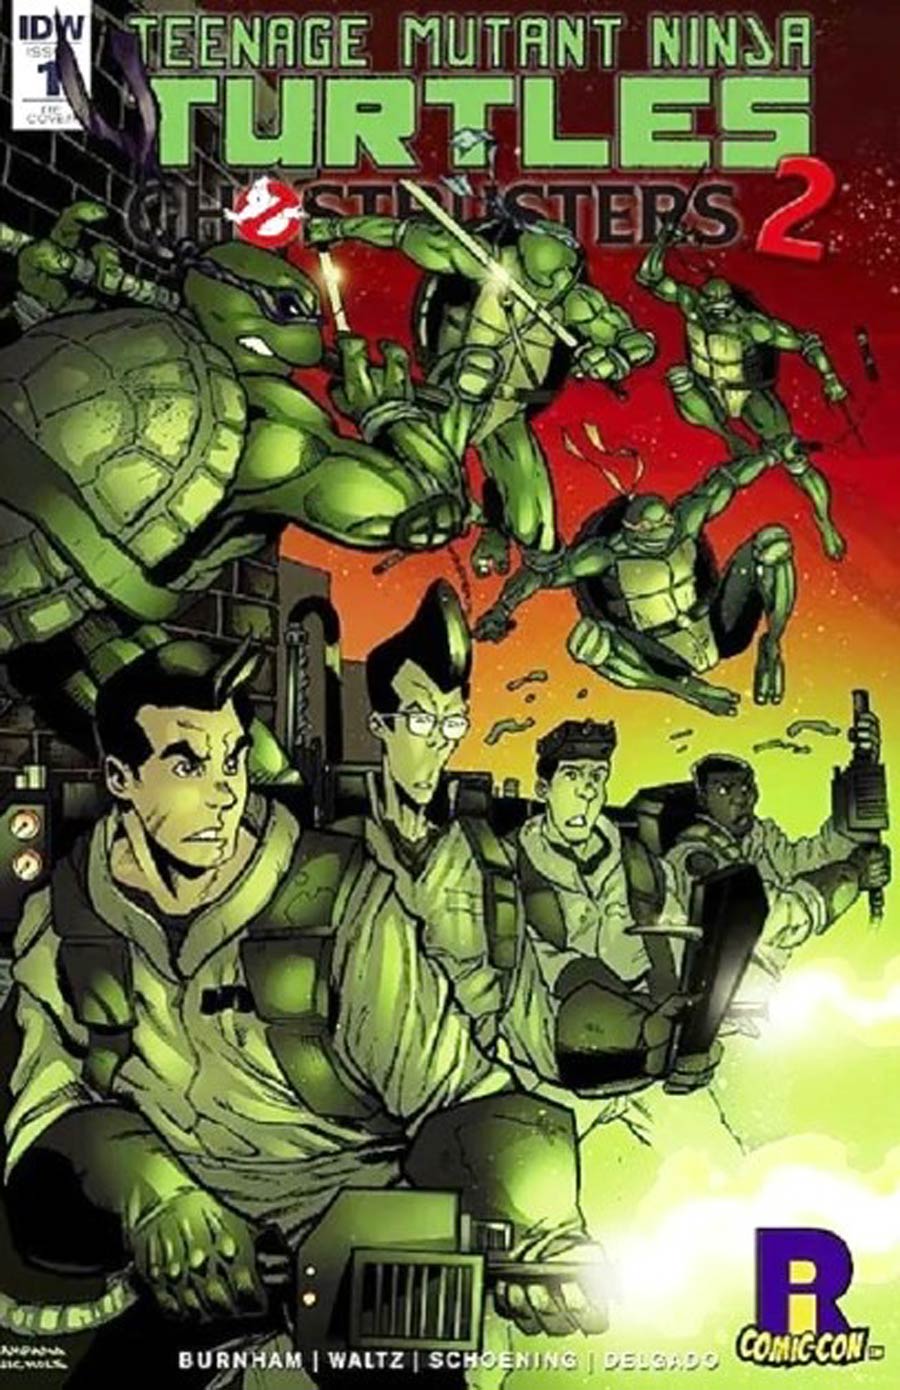 Teenage Mutant Ninja Turtles Ghostbusters II #1 Cover E Rhode Island Comic Con Exclusive